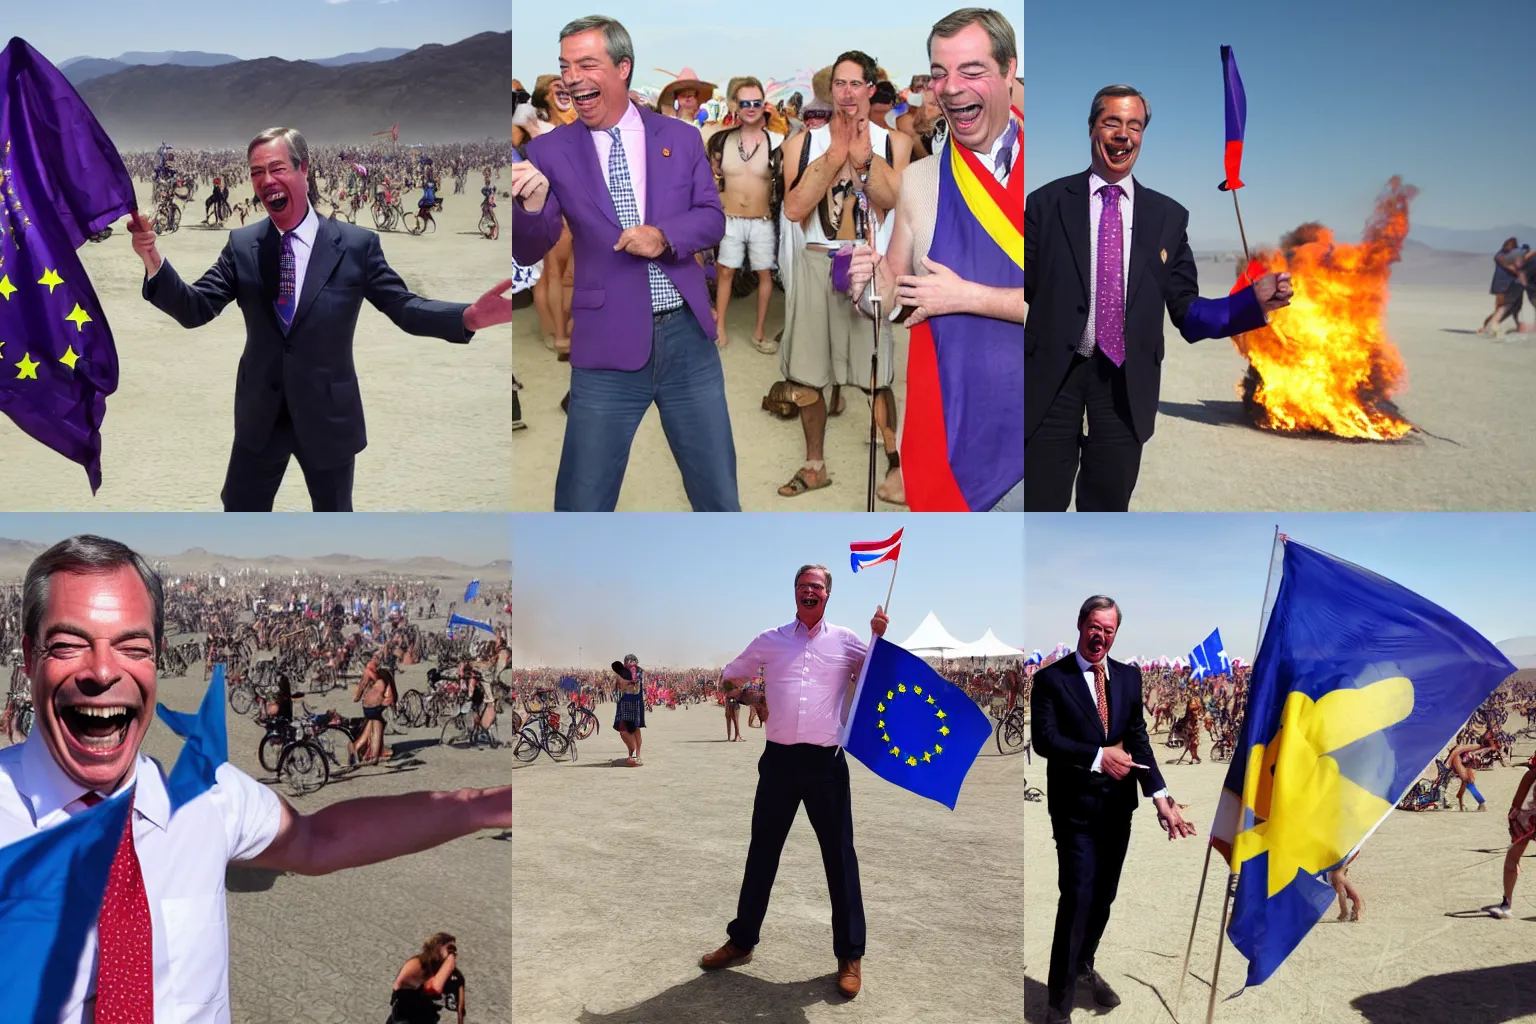 Prompt: nigel farage holding eu flag laughing at burning man festival